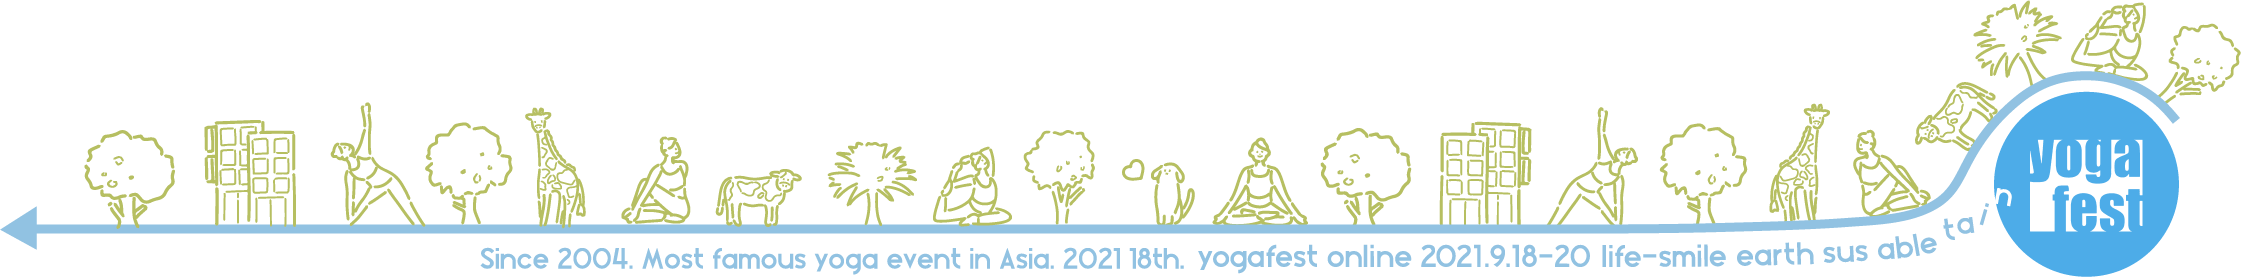 Yogafest ONLINE 2021